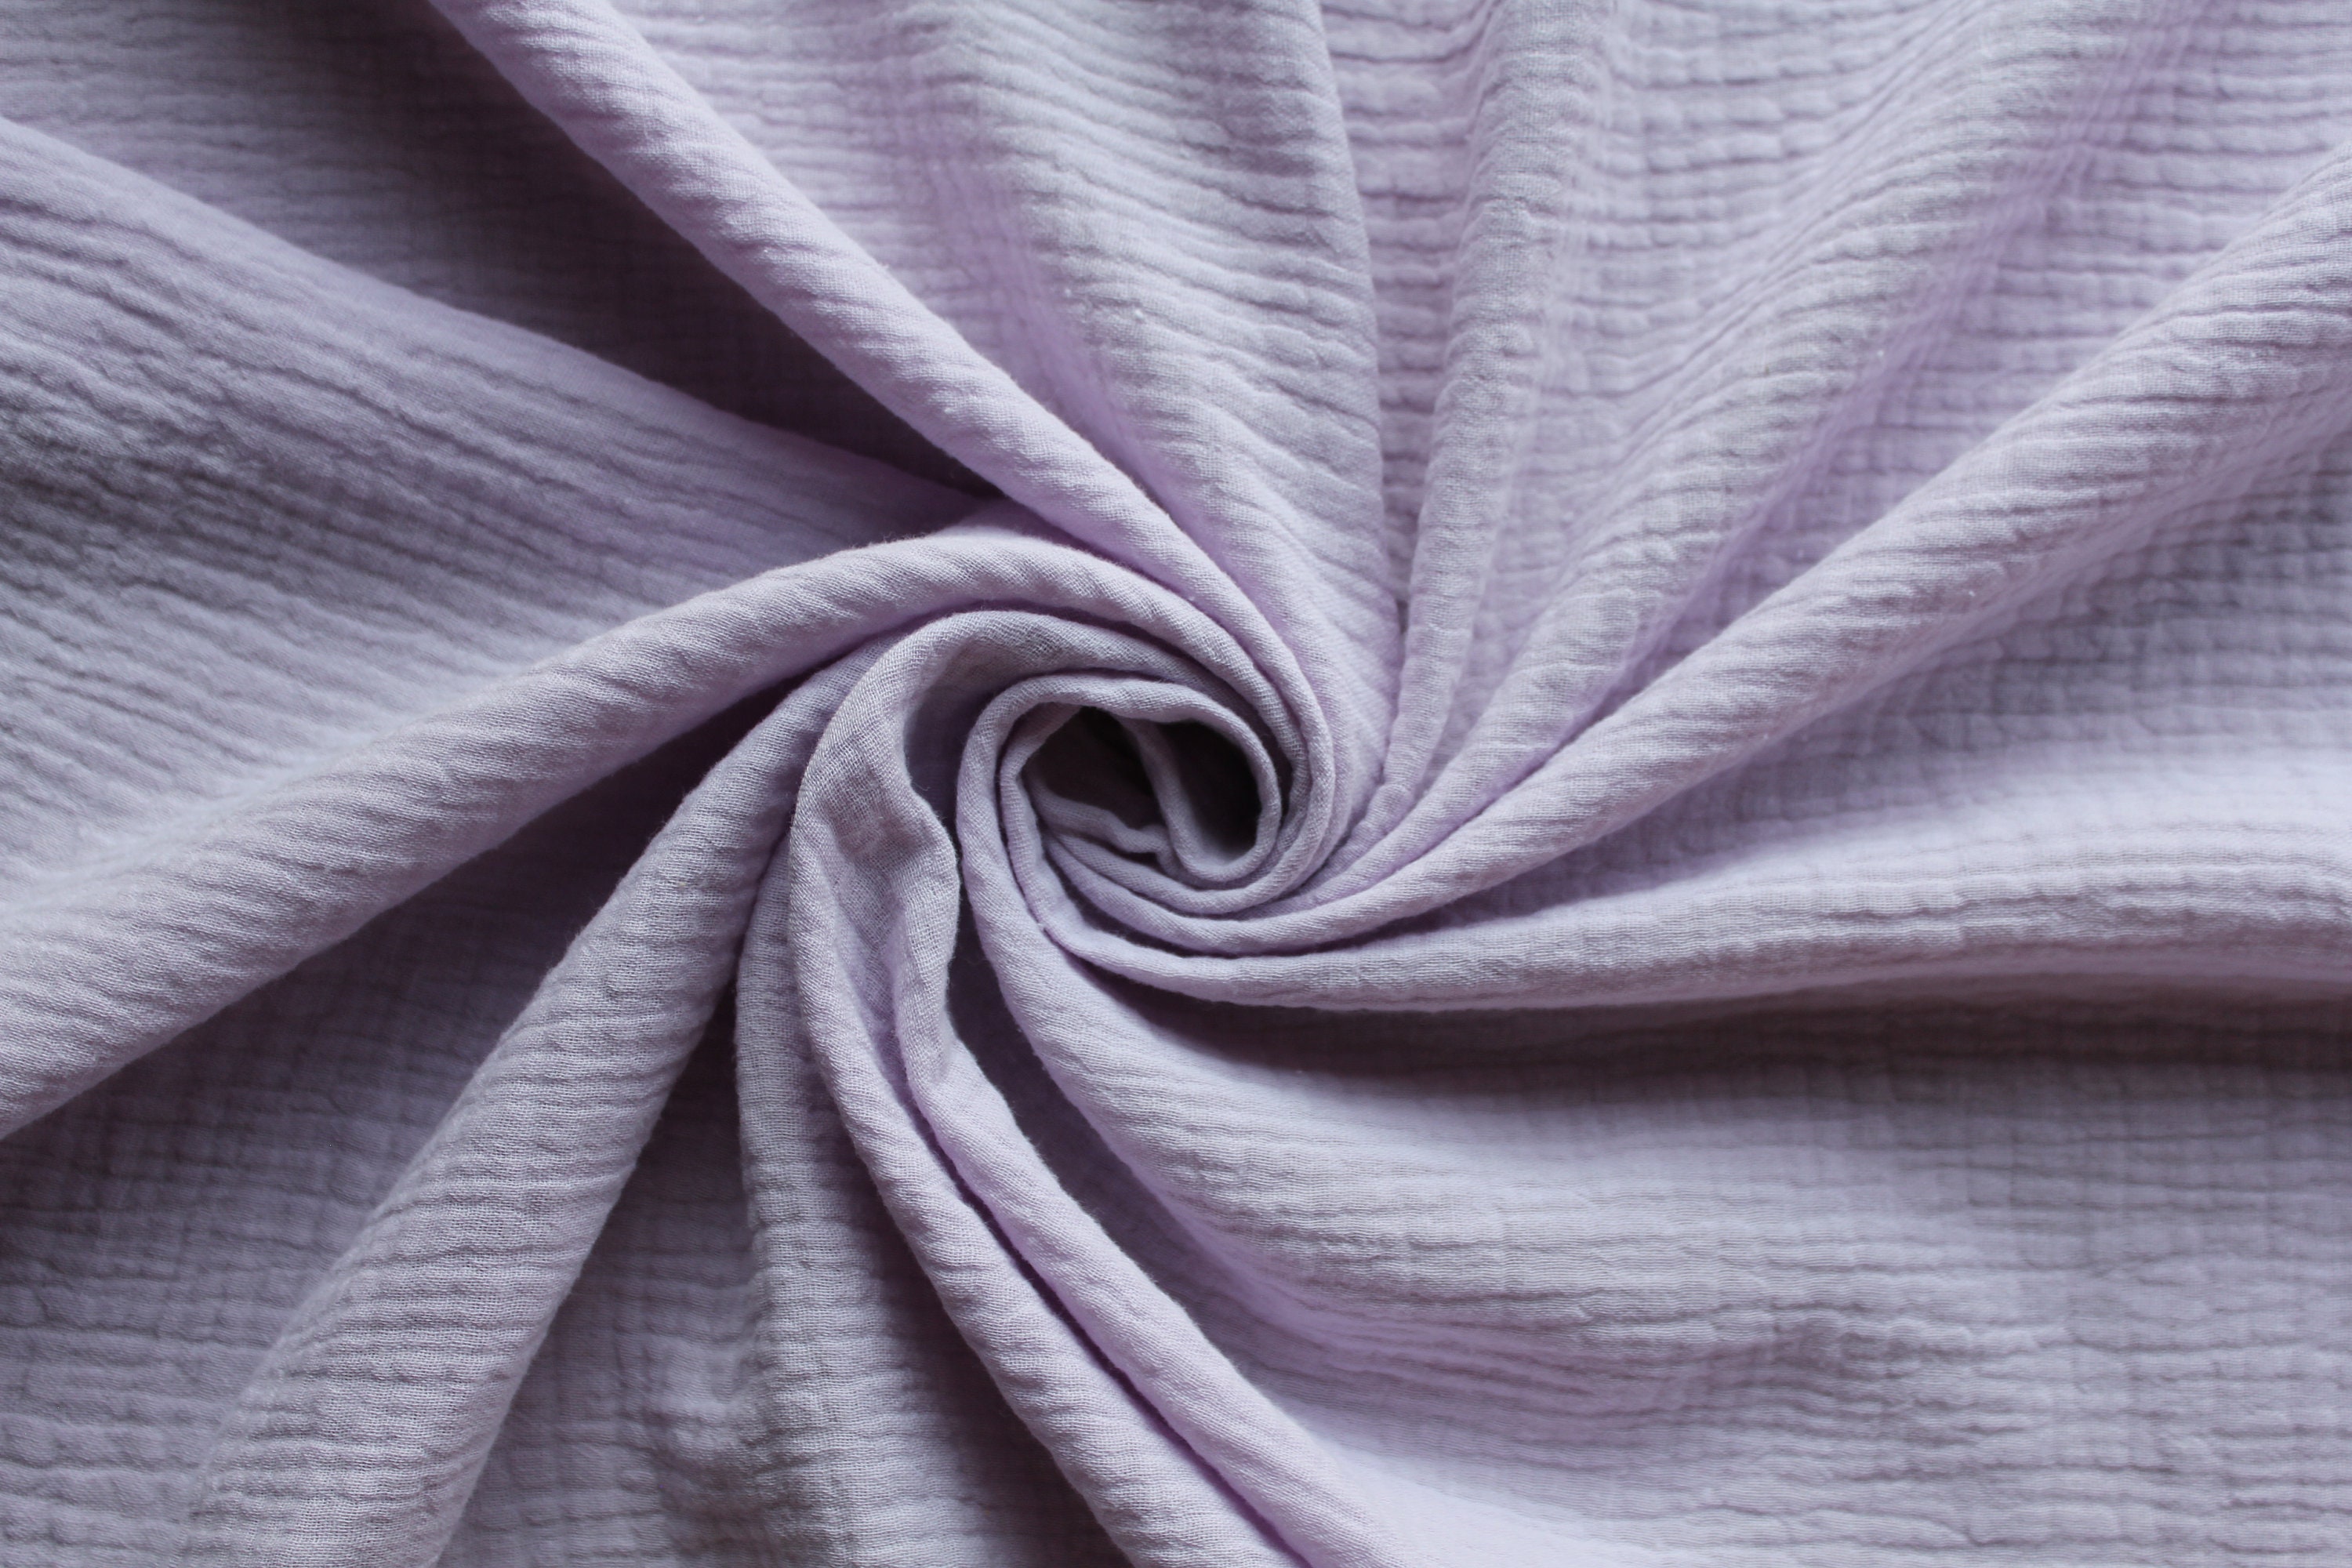 Double Layered Cotton Muslin Cloth – Clarkia Home